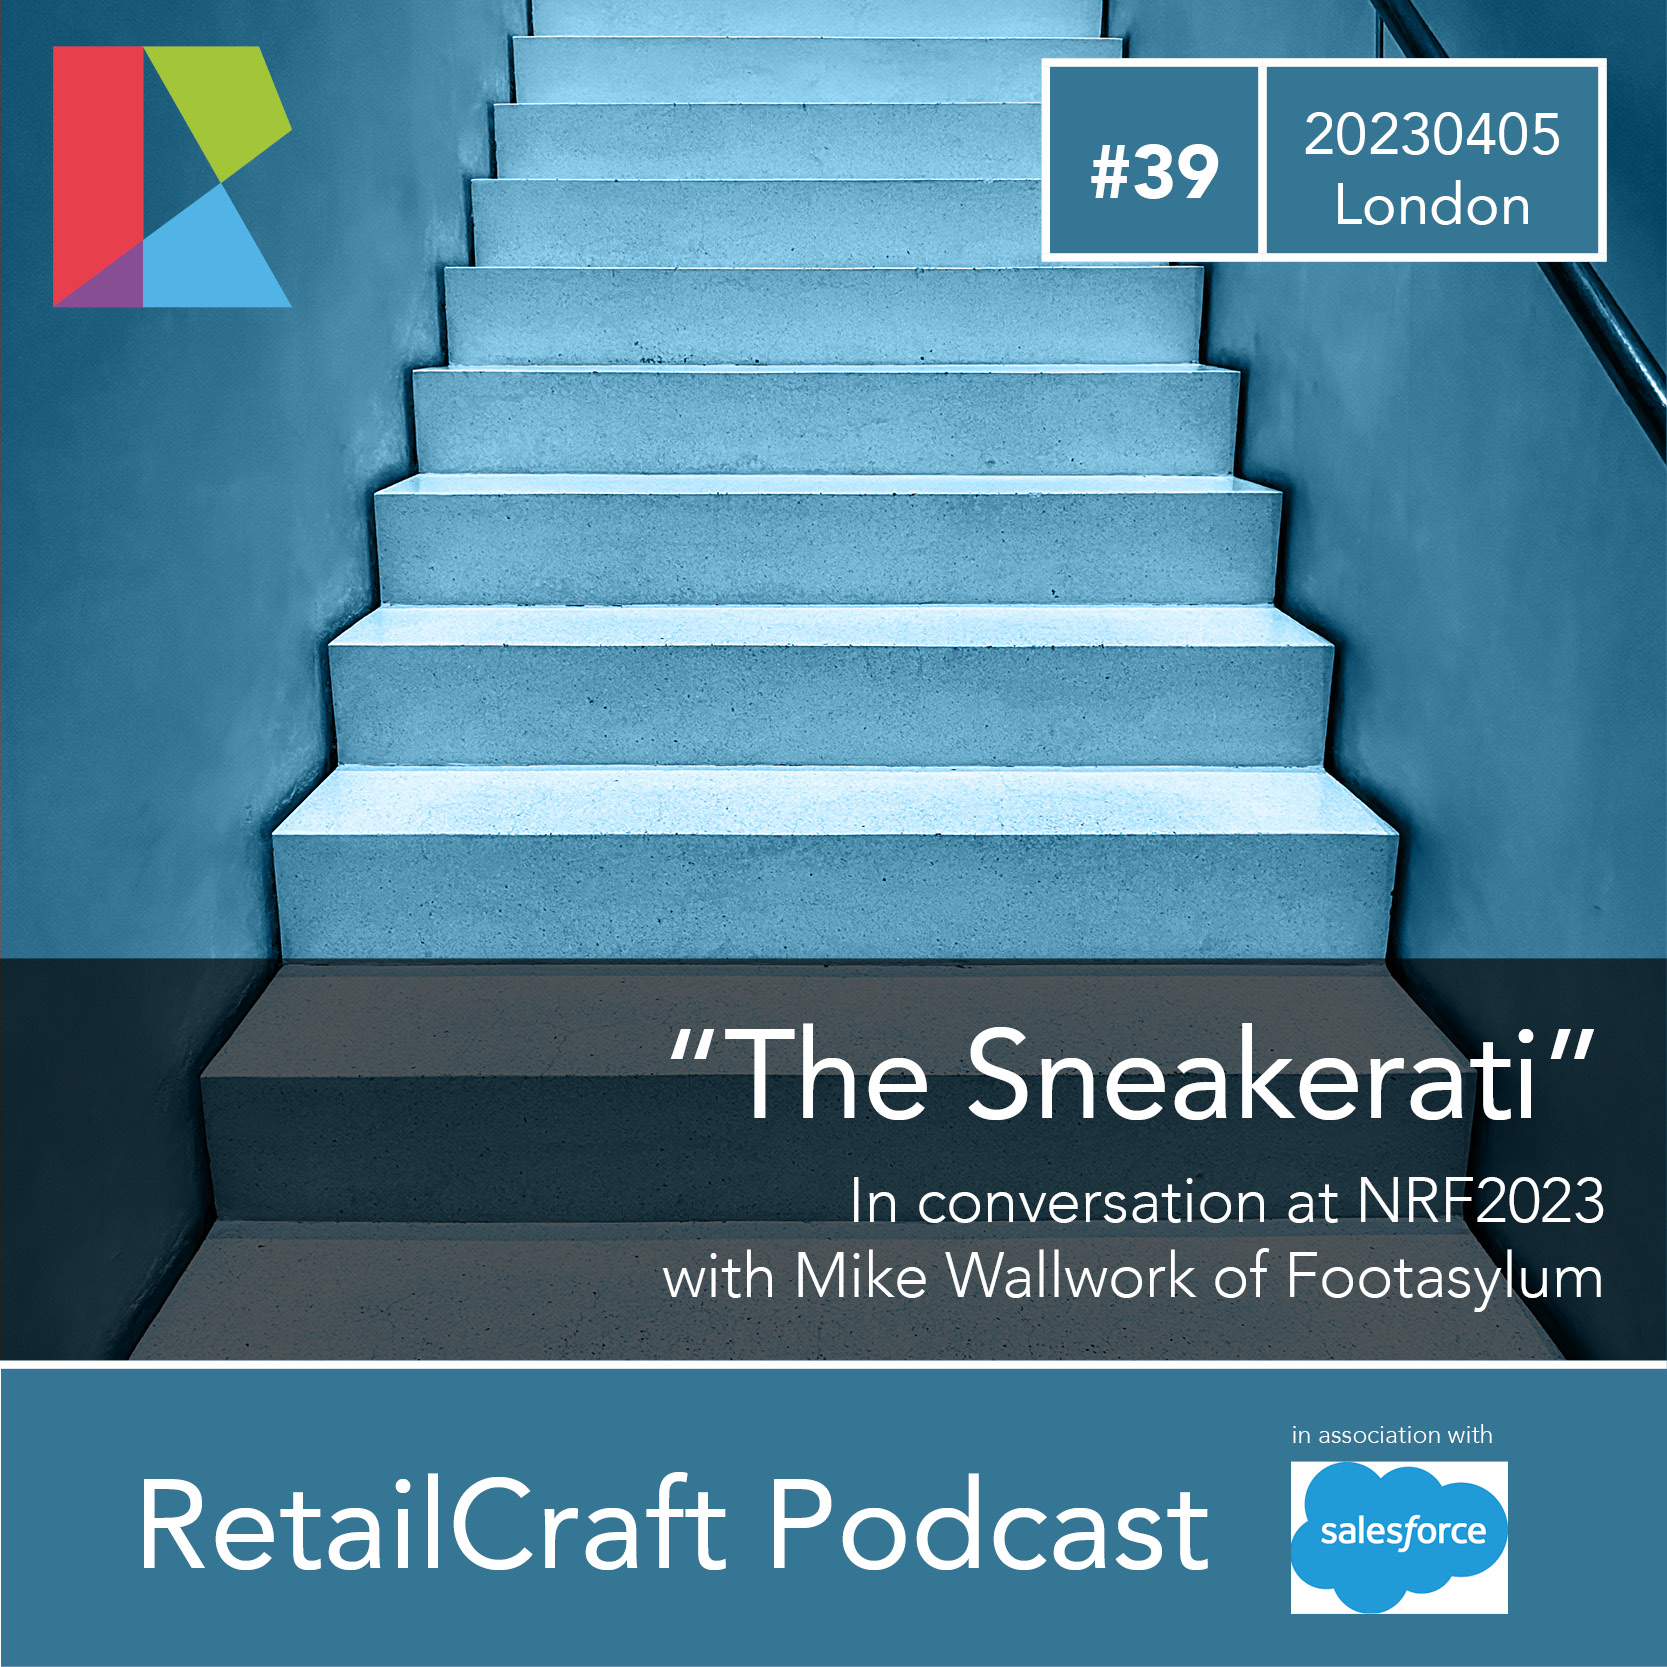 RetailCraft Podcast #39 – ”The Sneakerati” – Footasylum at NRF 2023